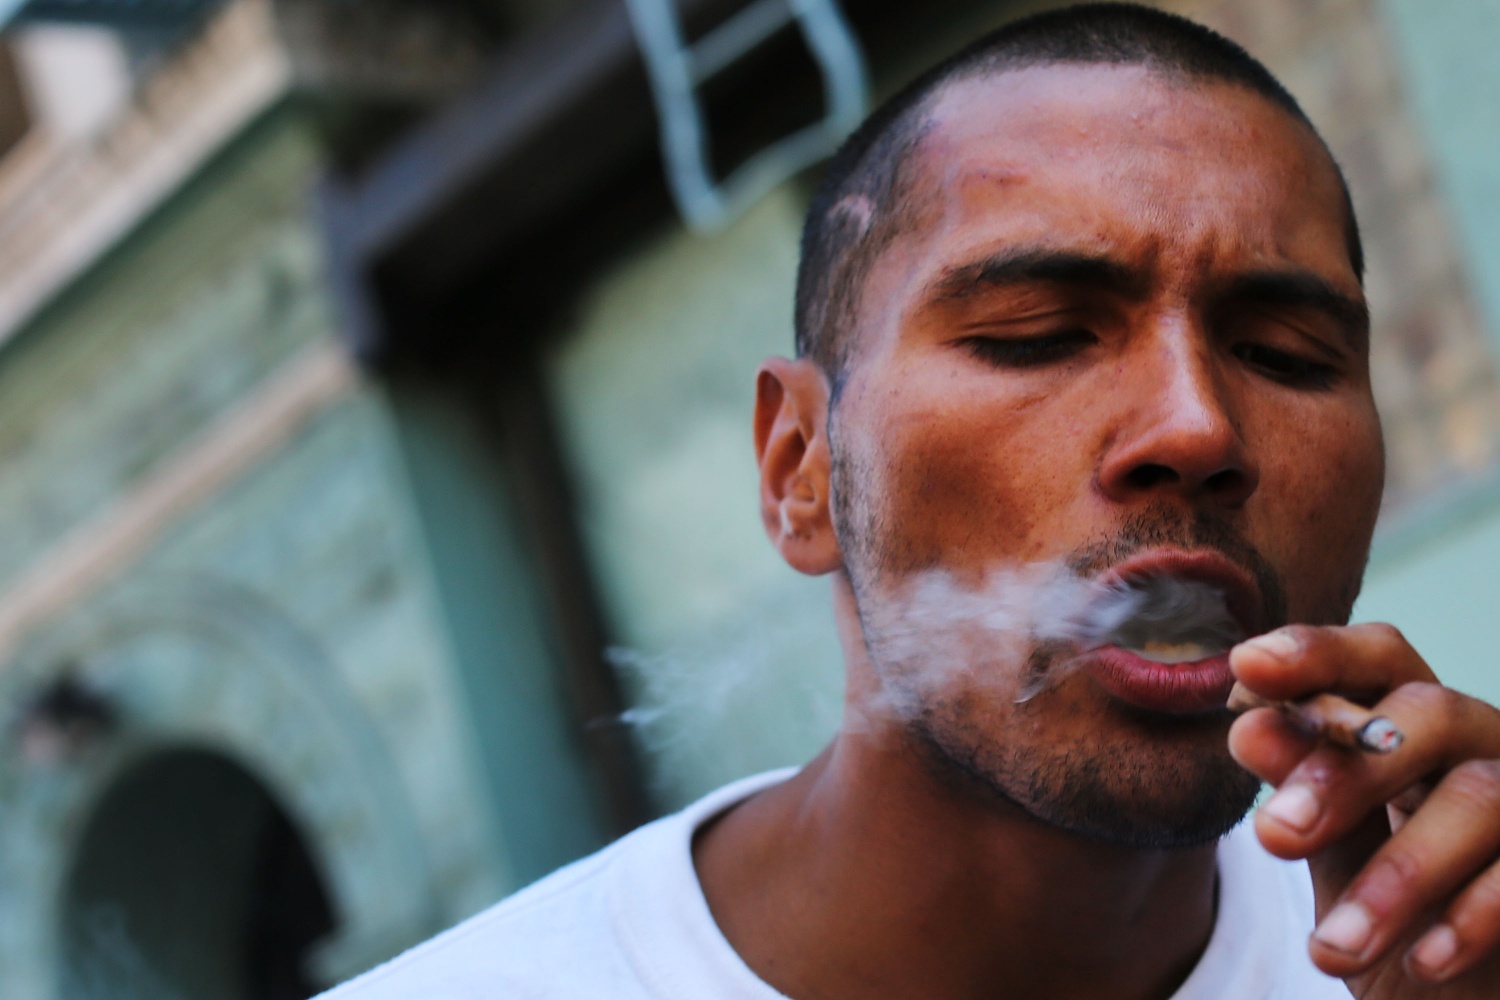 Man Smoking Fake Marijuana